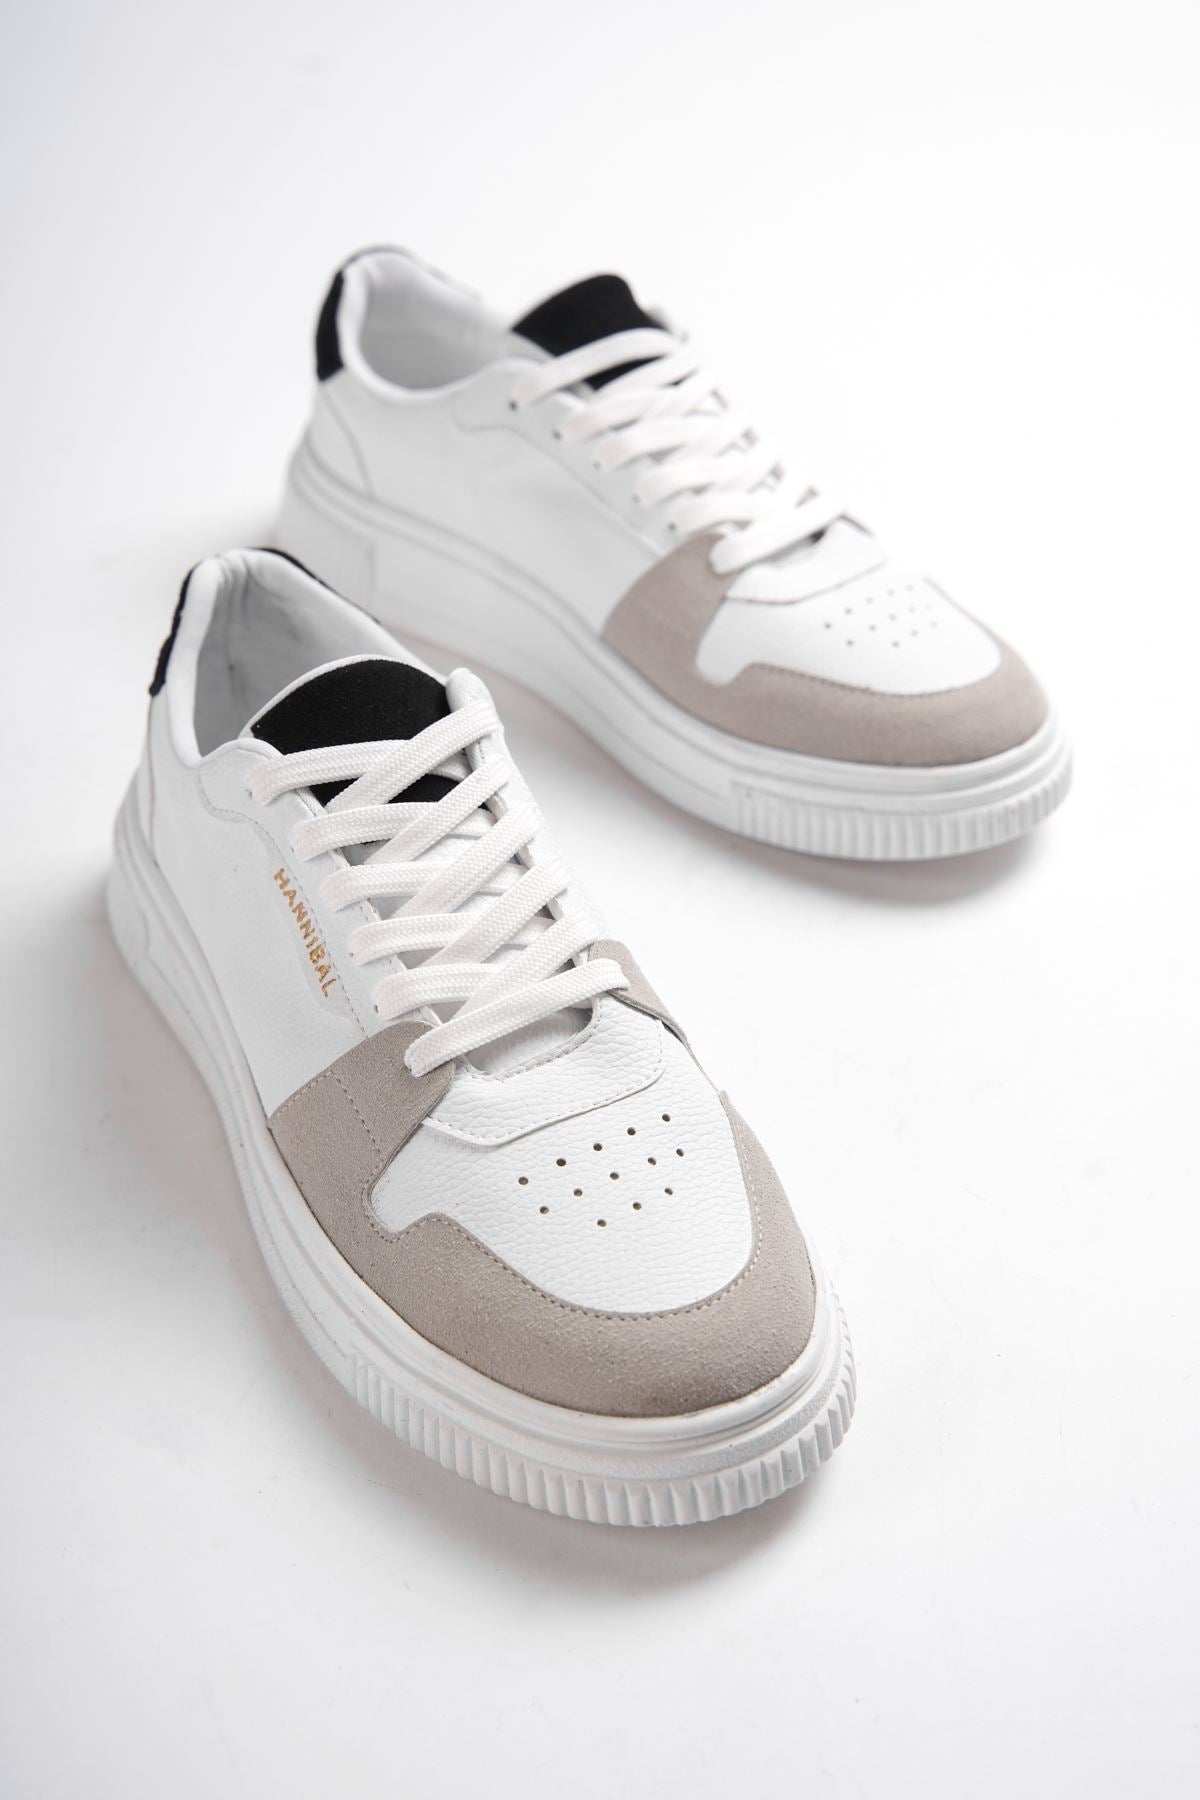 Men's Betria Gray Black Sneaker Shoes - STREETMODE™